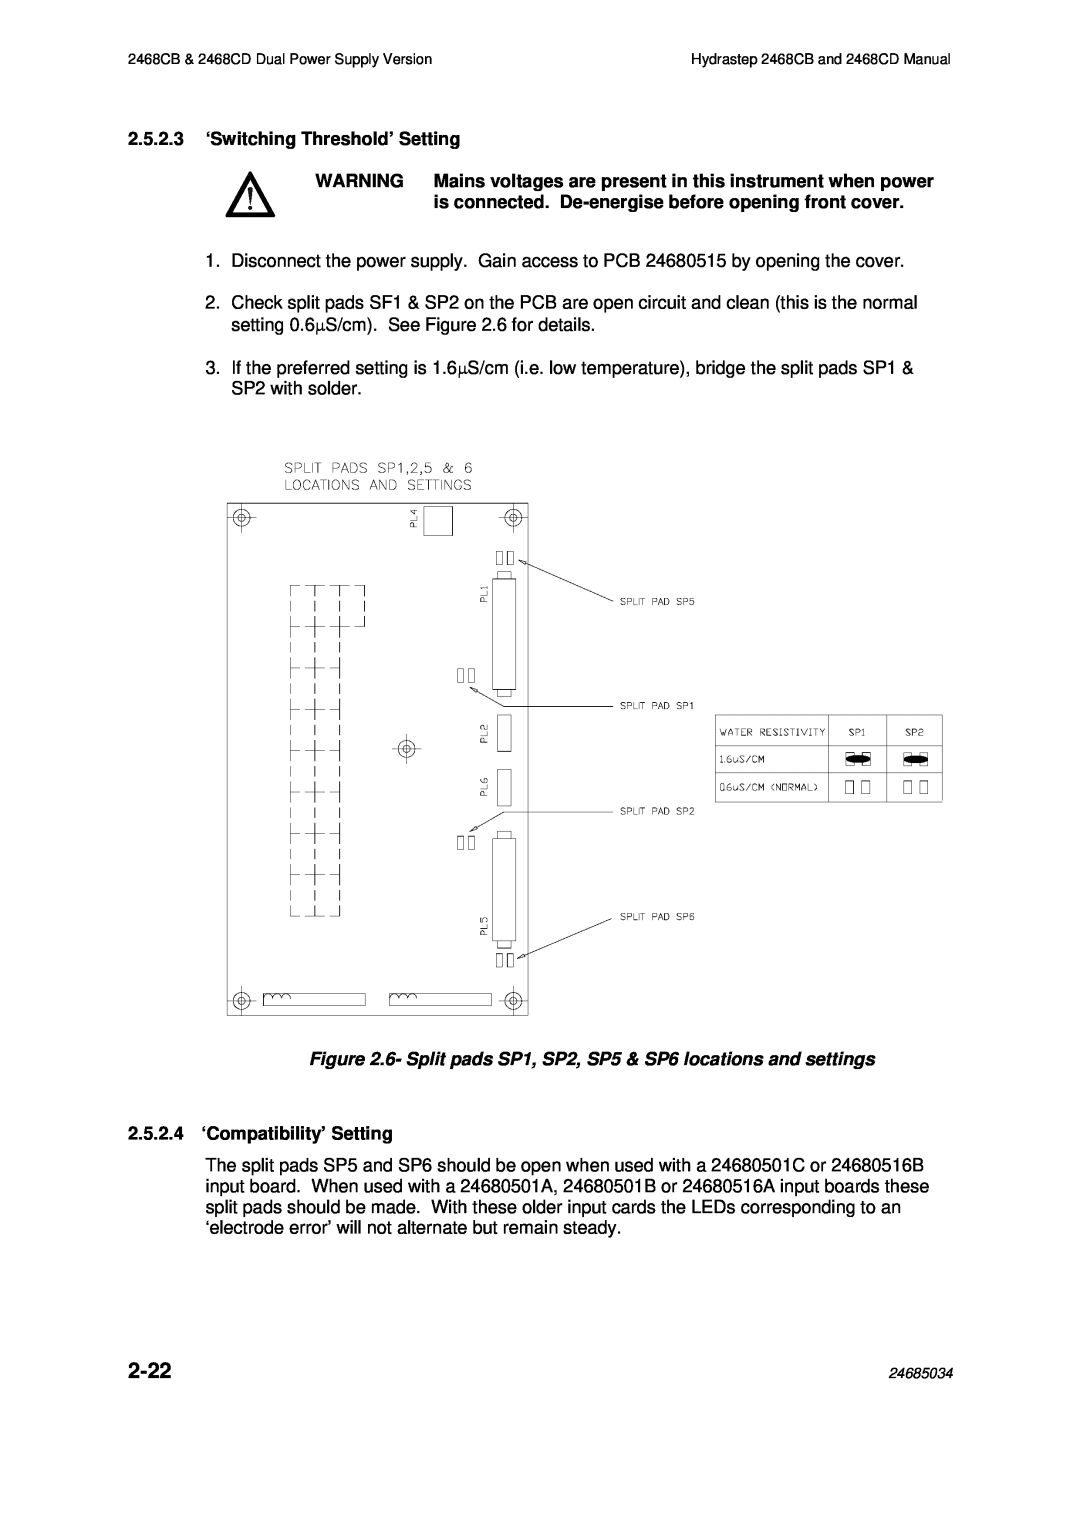 Emerson 2468CB, 2468CD manual 2-22, 2.5.2.3‘Switching Threshold’ Setting, 2.5.2.4 ‘Compatibility’ Setting 